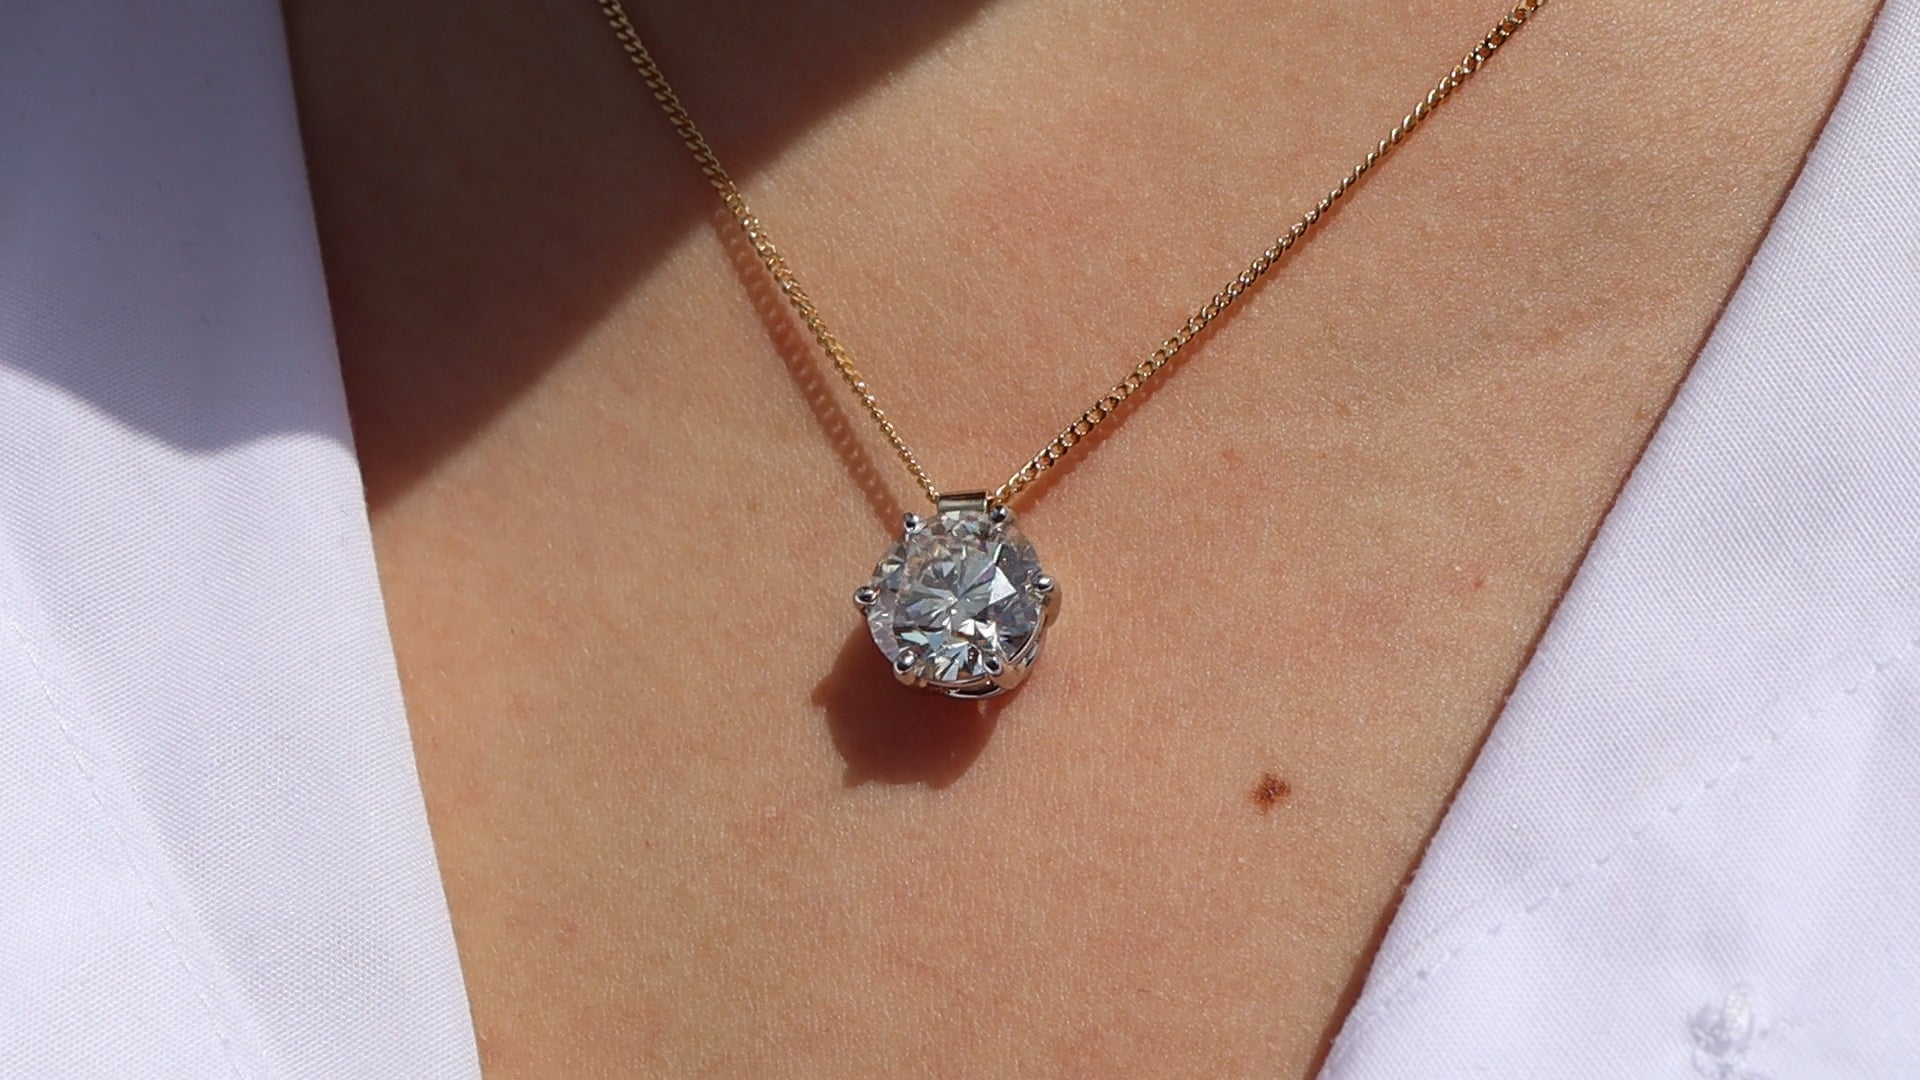 Solitaire Pendant - The 3.50Ct Round Brilliant diamond sparkles beautifully